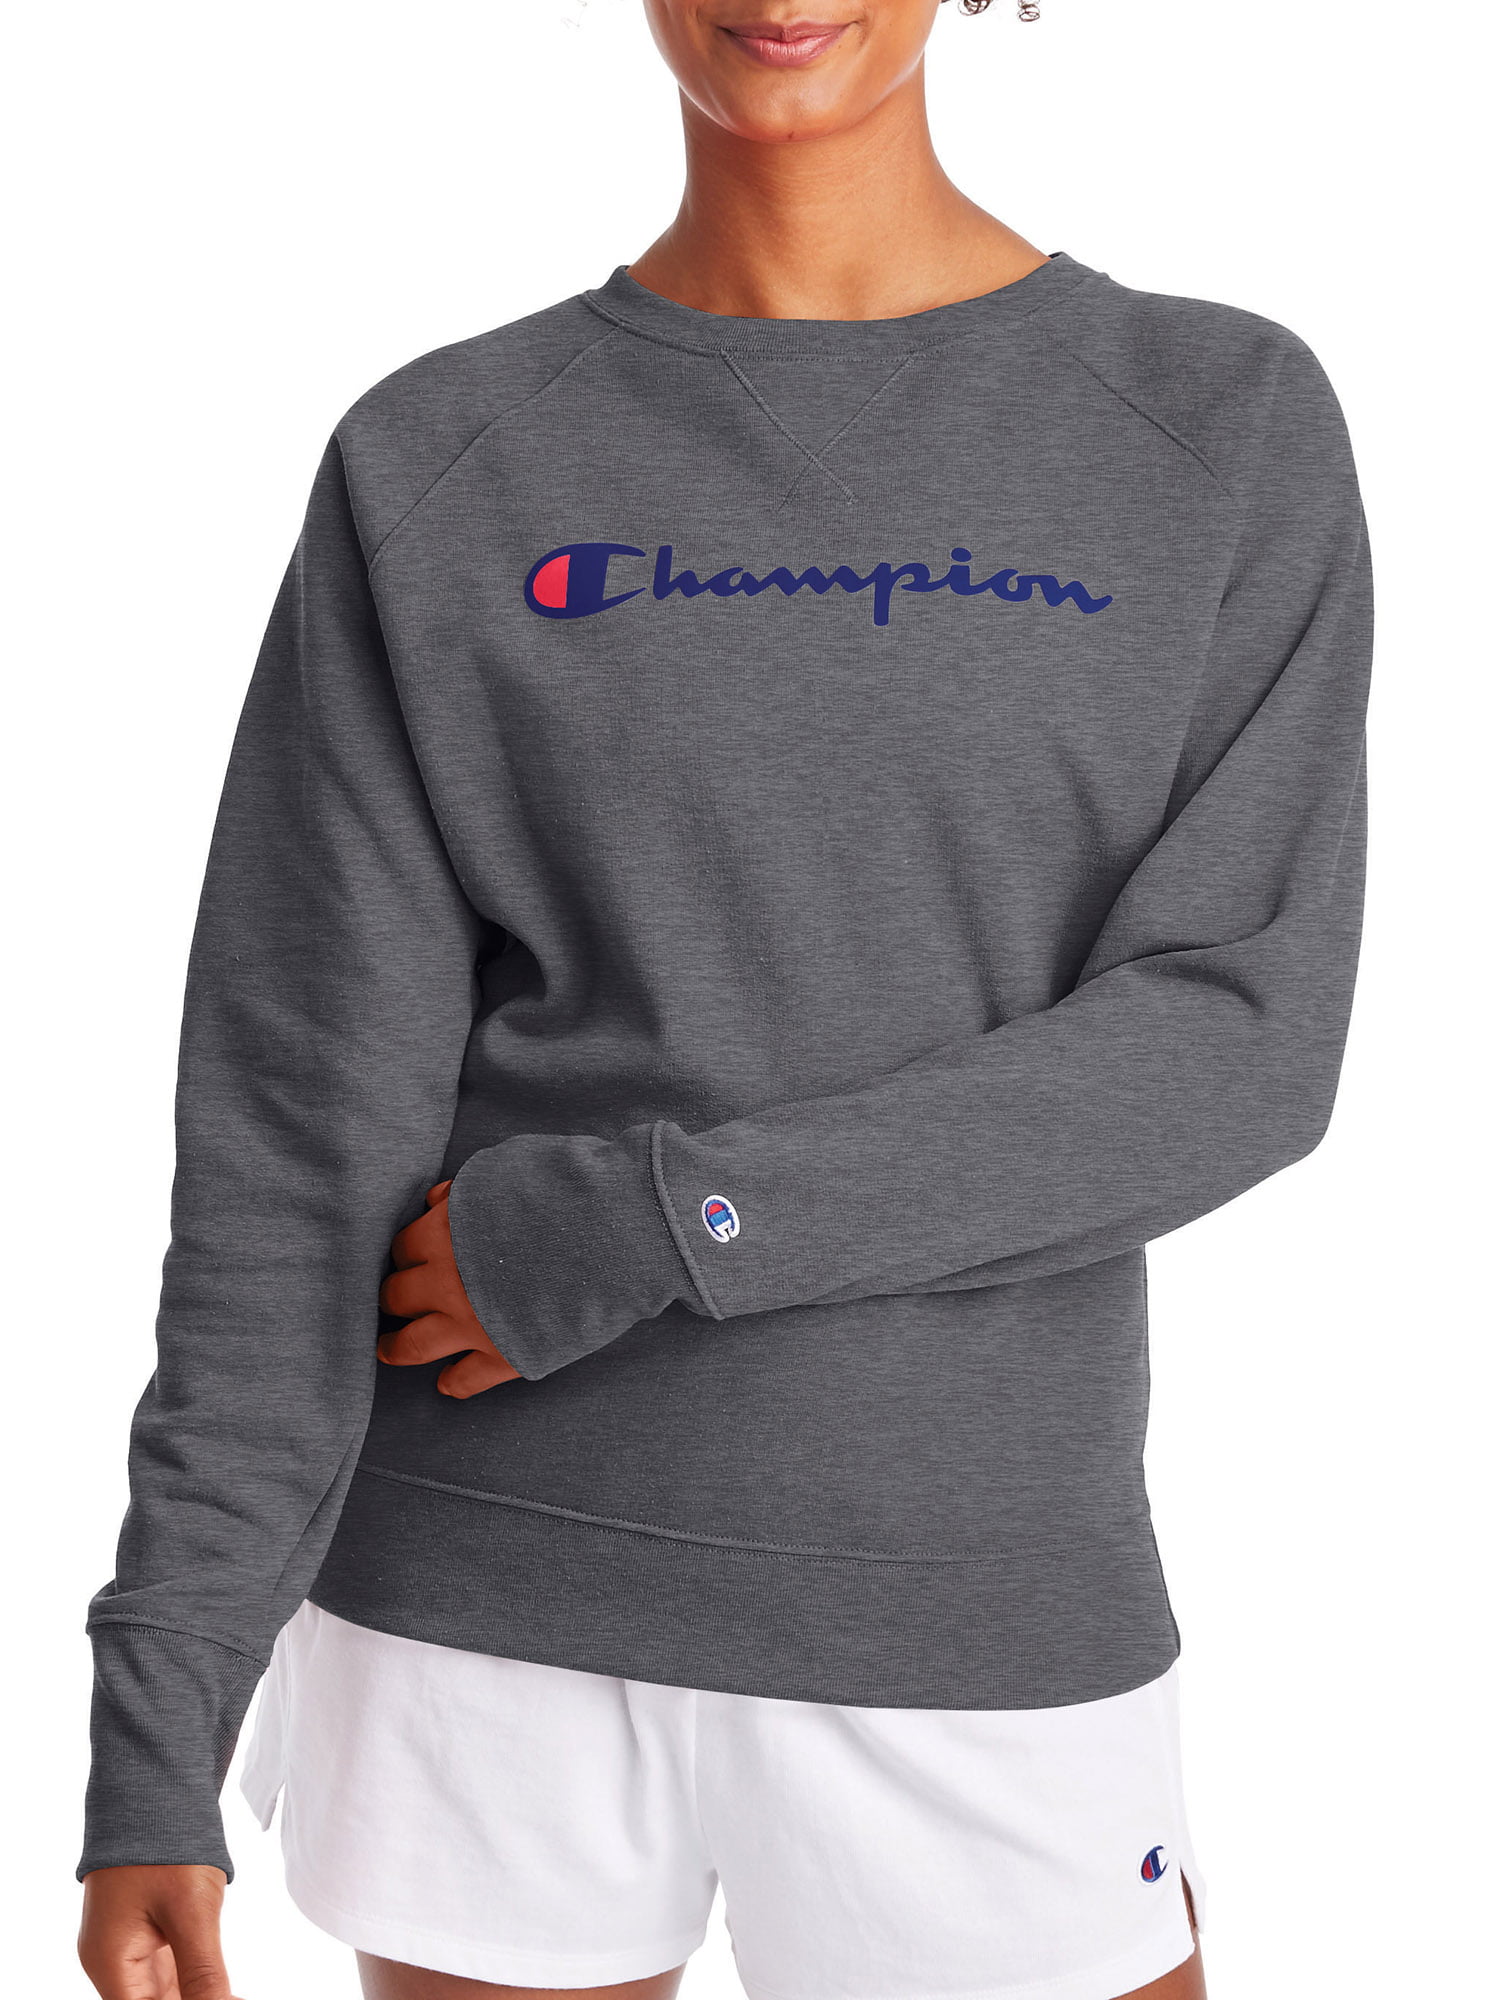 champion sweatshirt womans